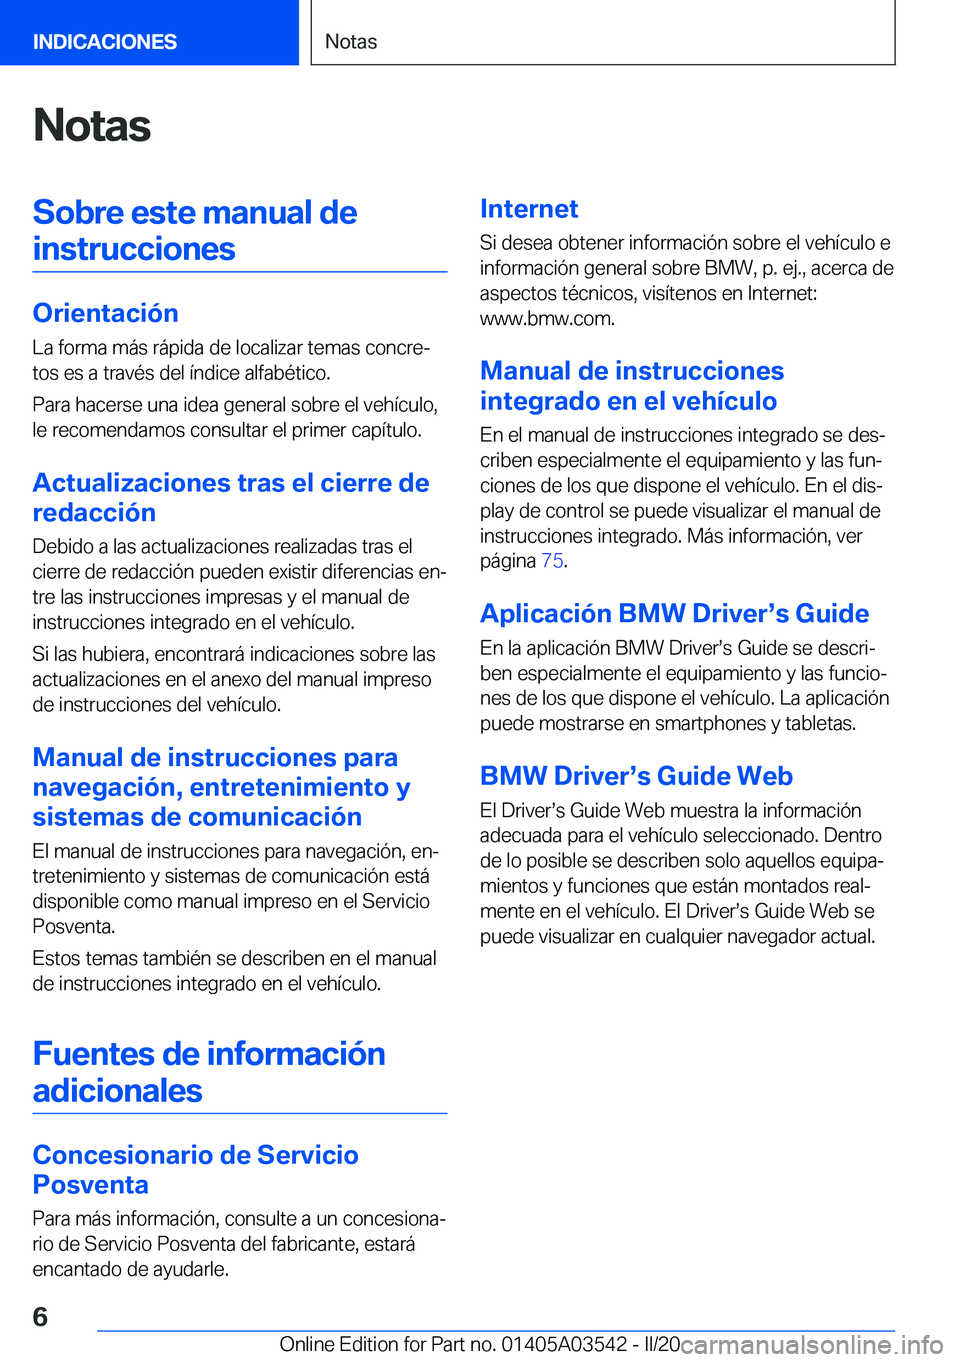 BMW X3 PLUG IN HYBRID 2020  Manuales de Empleo (in Spanish) �N�o�t�a�s�S�o�b�r�e��e�s�t�e��m�a�n�u�a�l��d�e�i�n�s�t�r�u�c�c�i�o�n�e�s
�O�r�i�e�n�t�a�c�i�